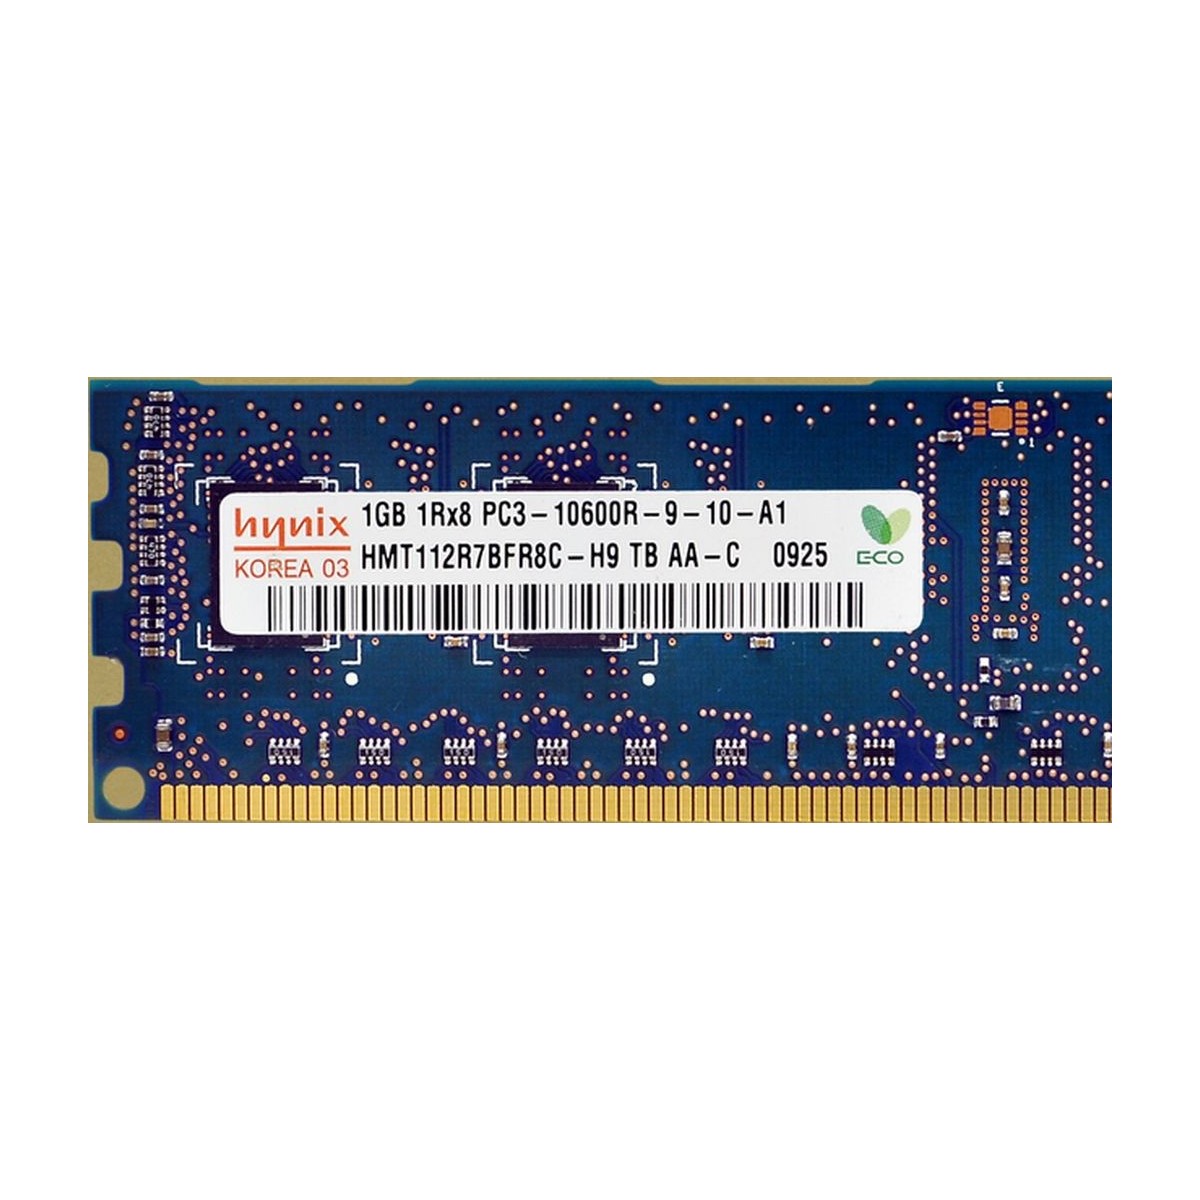 PAMIEC HYNIX 1GB 1RX8 PC3-10600R  HMT112R7BFR8C